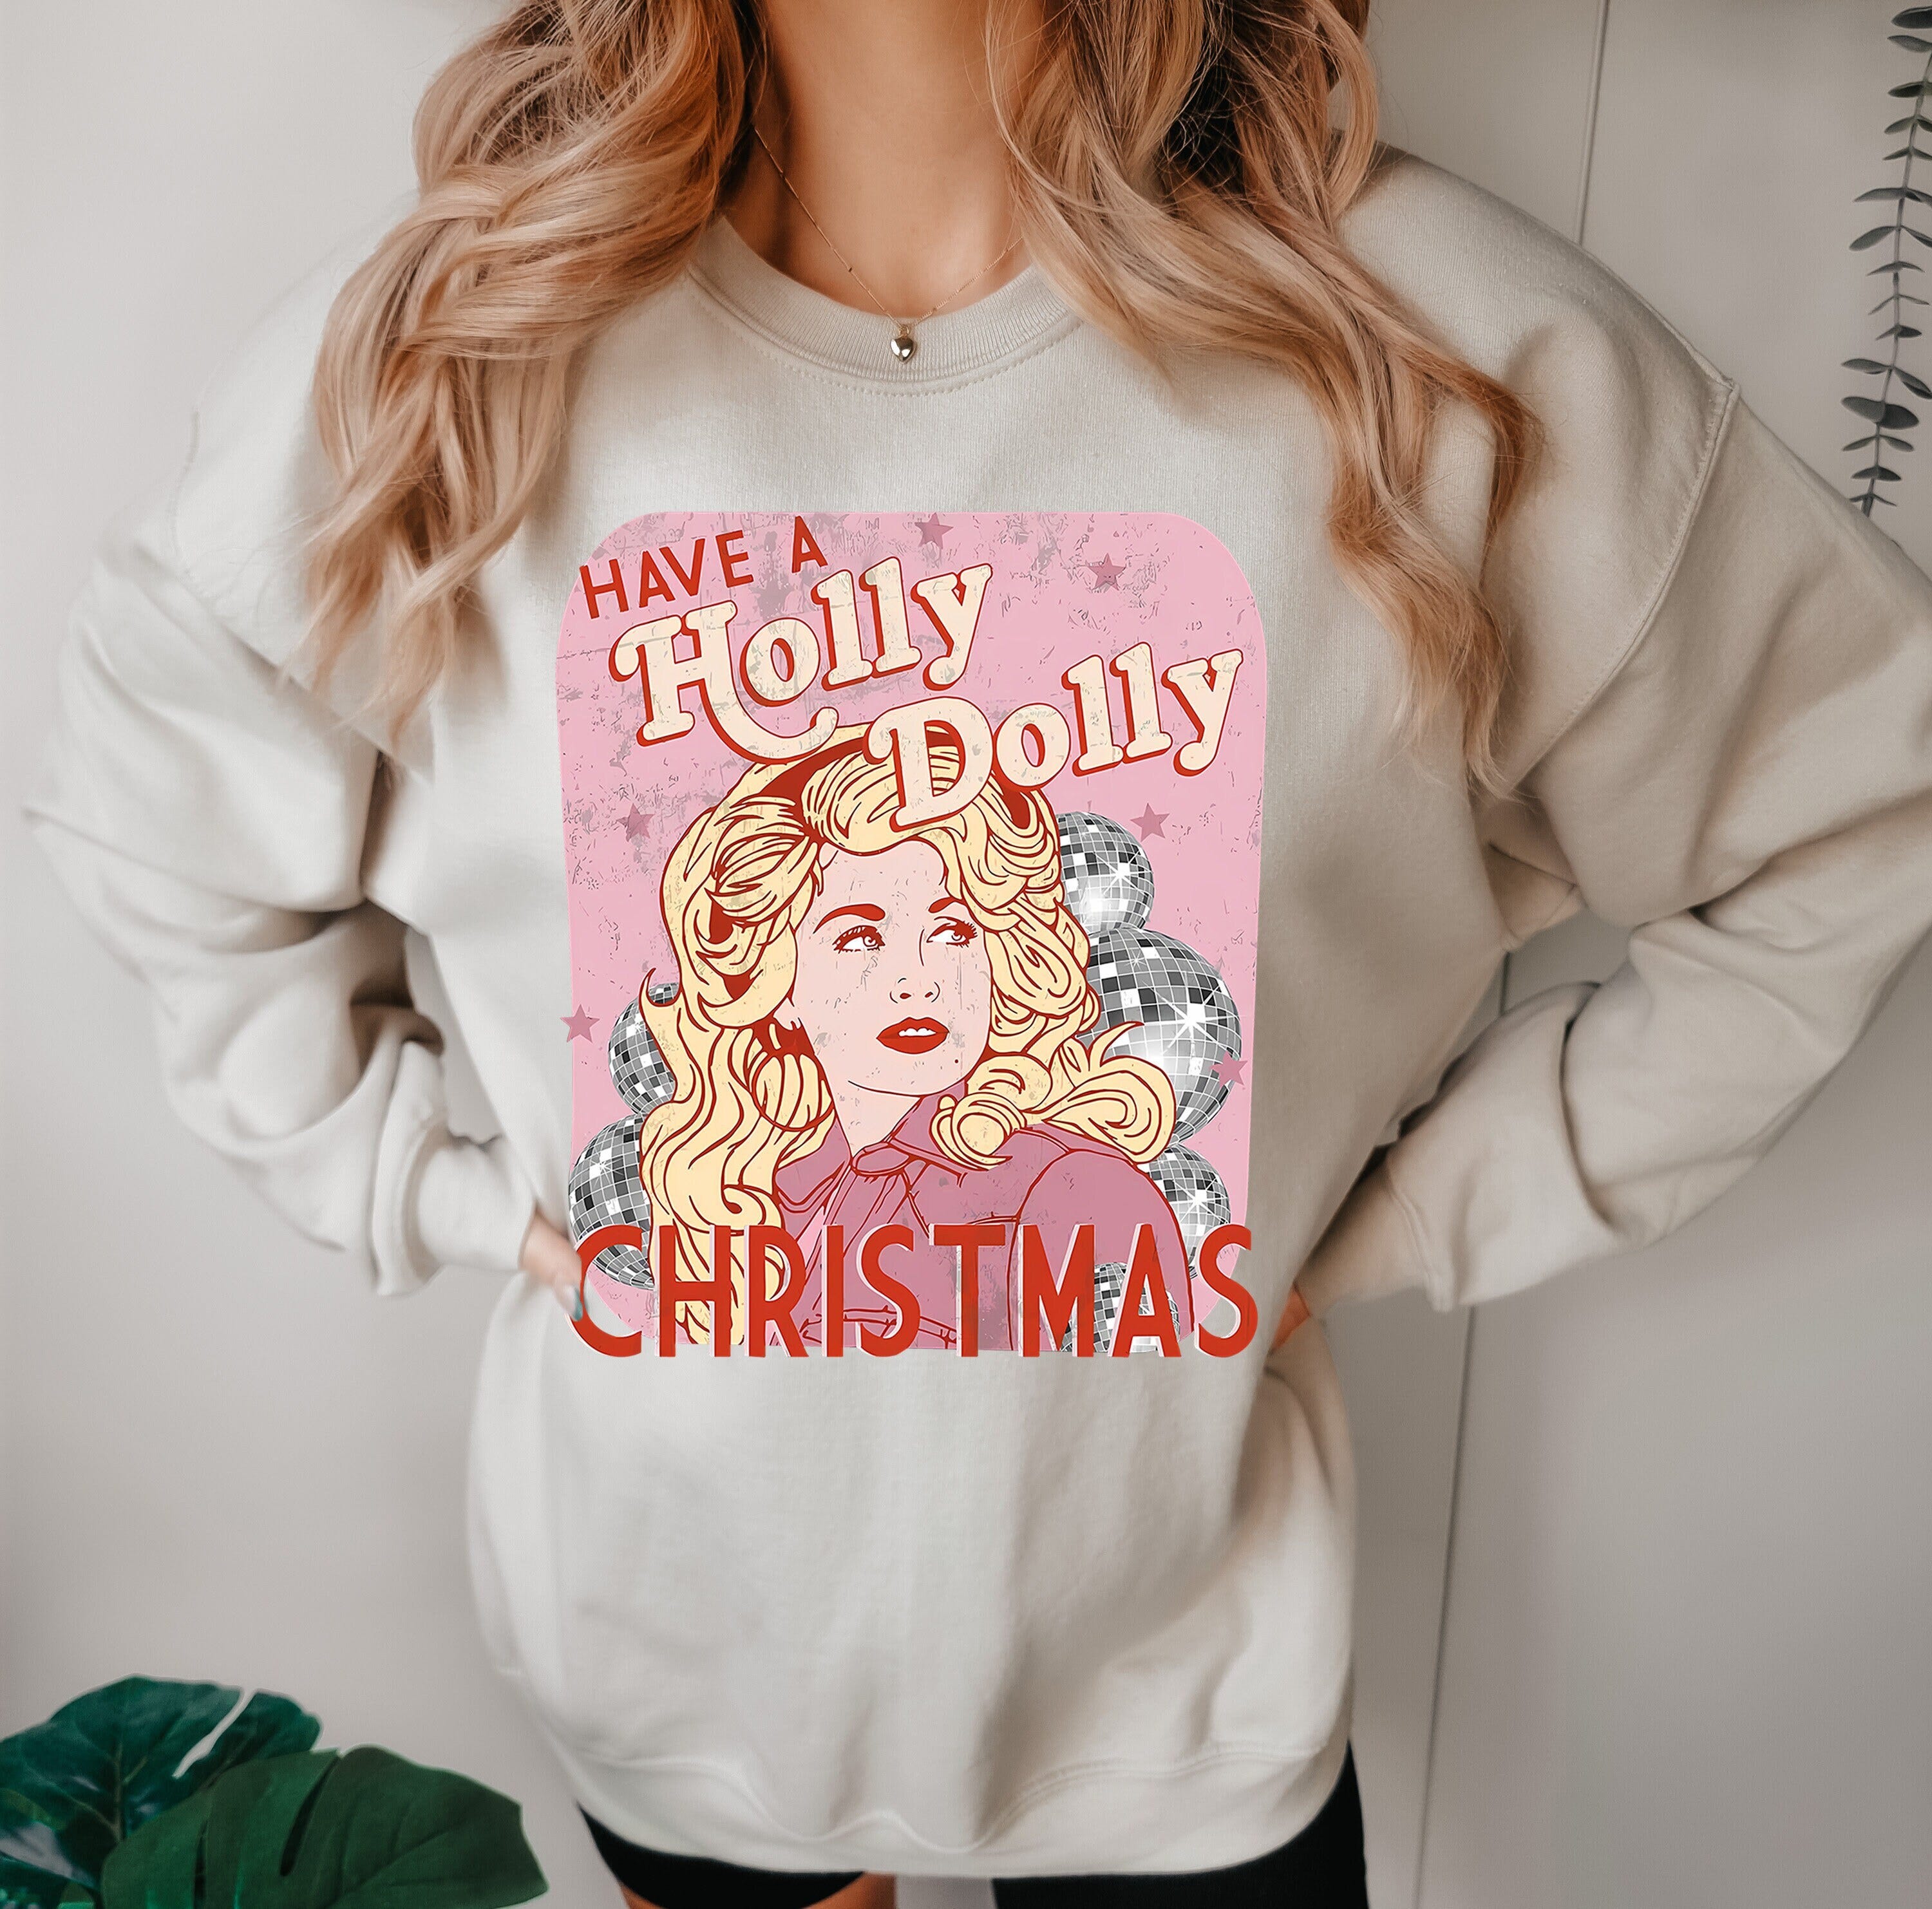 Holly Dolly Retro Sweatshirt - Christmas Western Xmas Shirt with Dolly Parton Theme